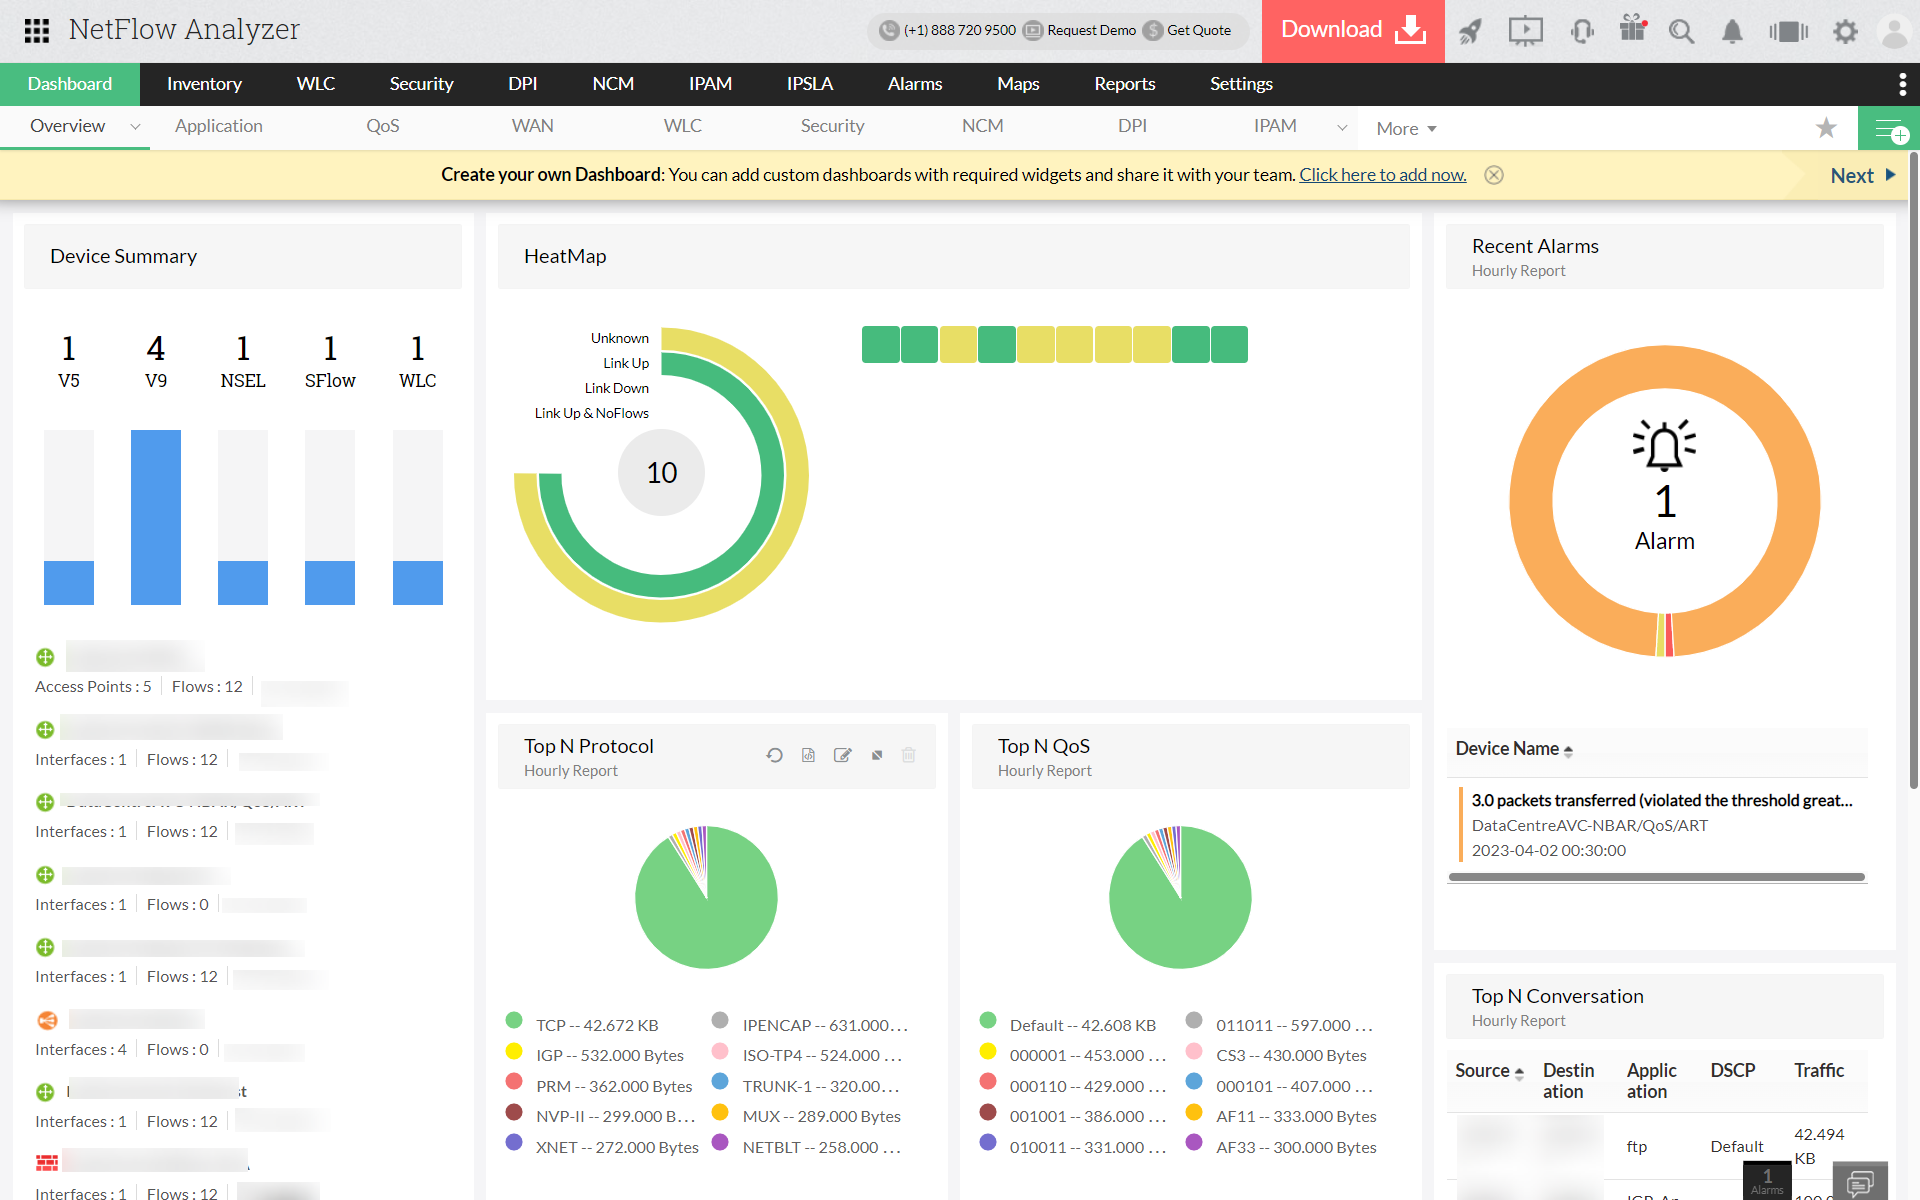 Cisco ASA Traffic Monitoring Software - ManageEngine NetFlow Analyzer